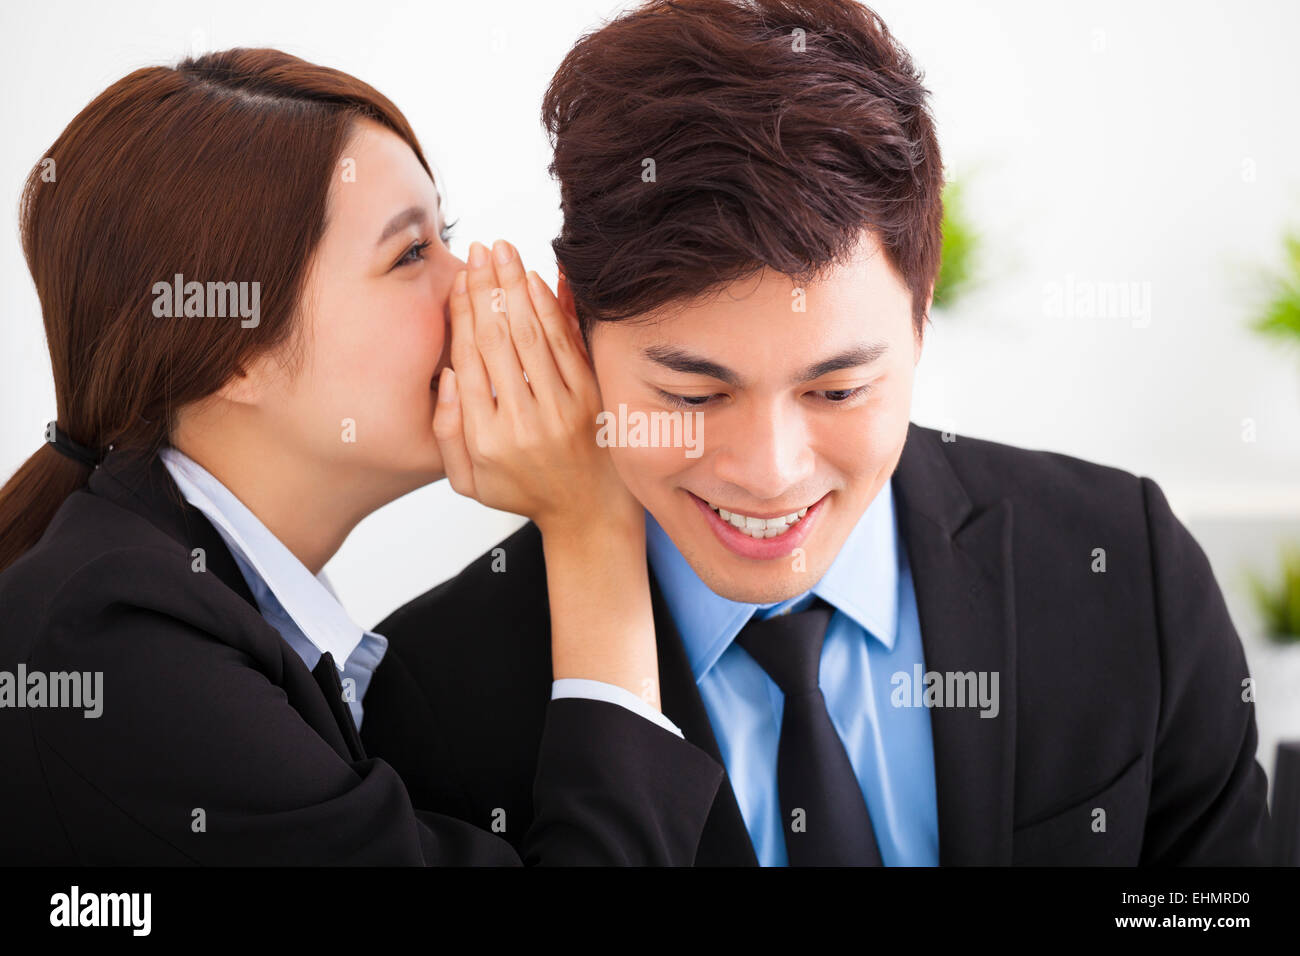 business gossip between businesswoman and businessman Stock Photo